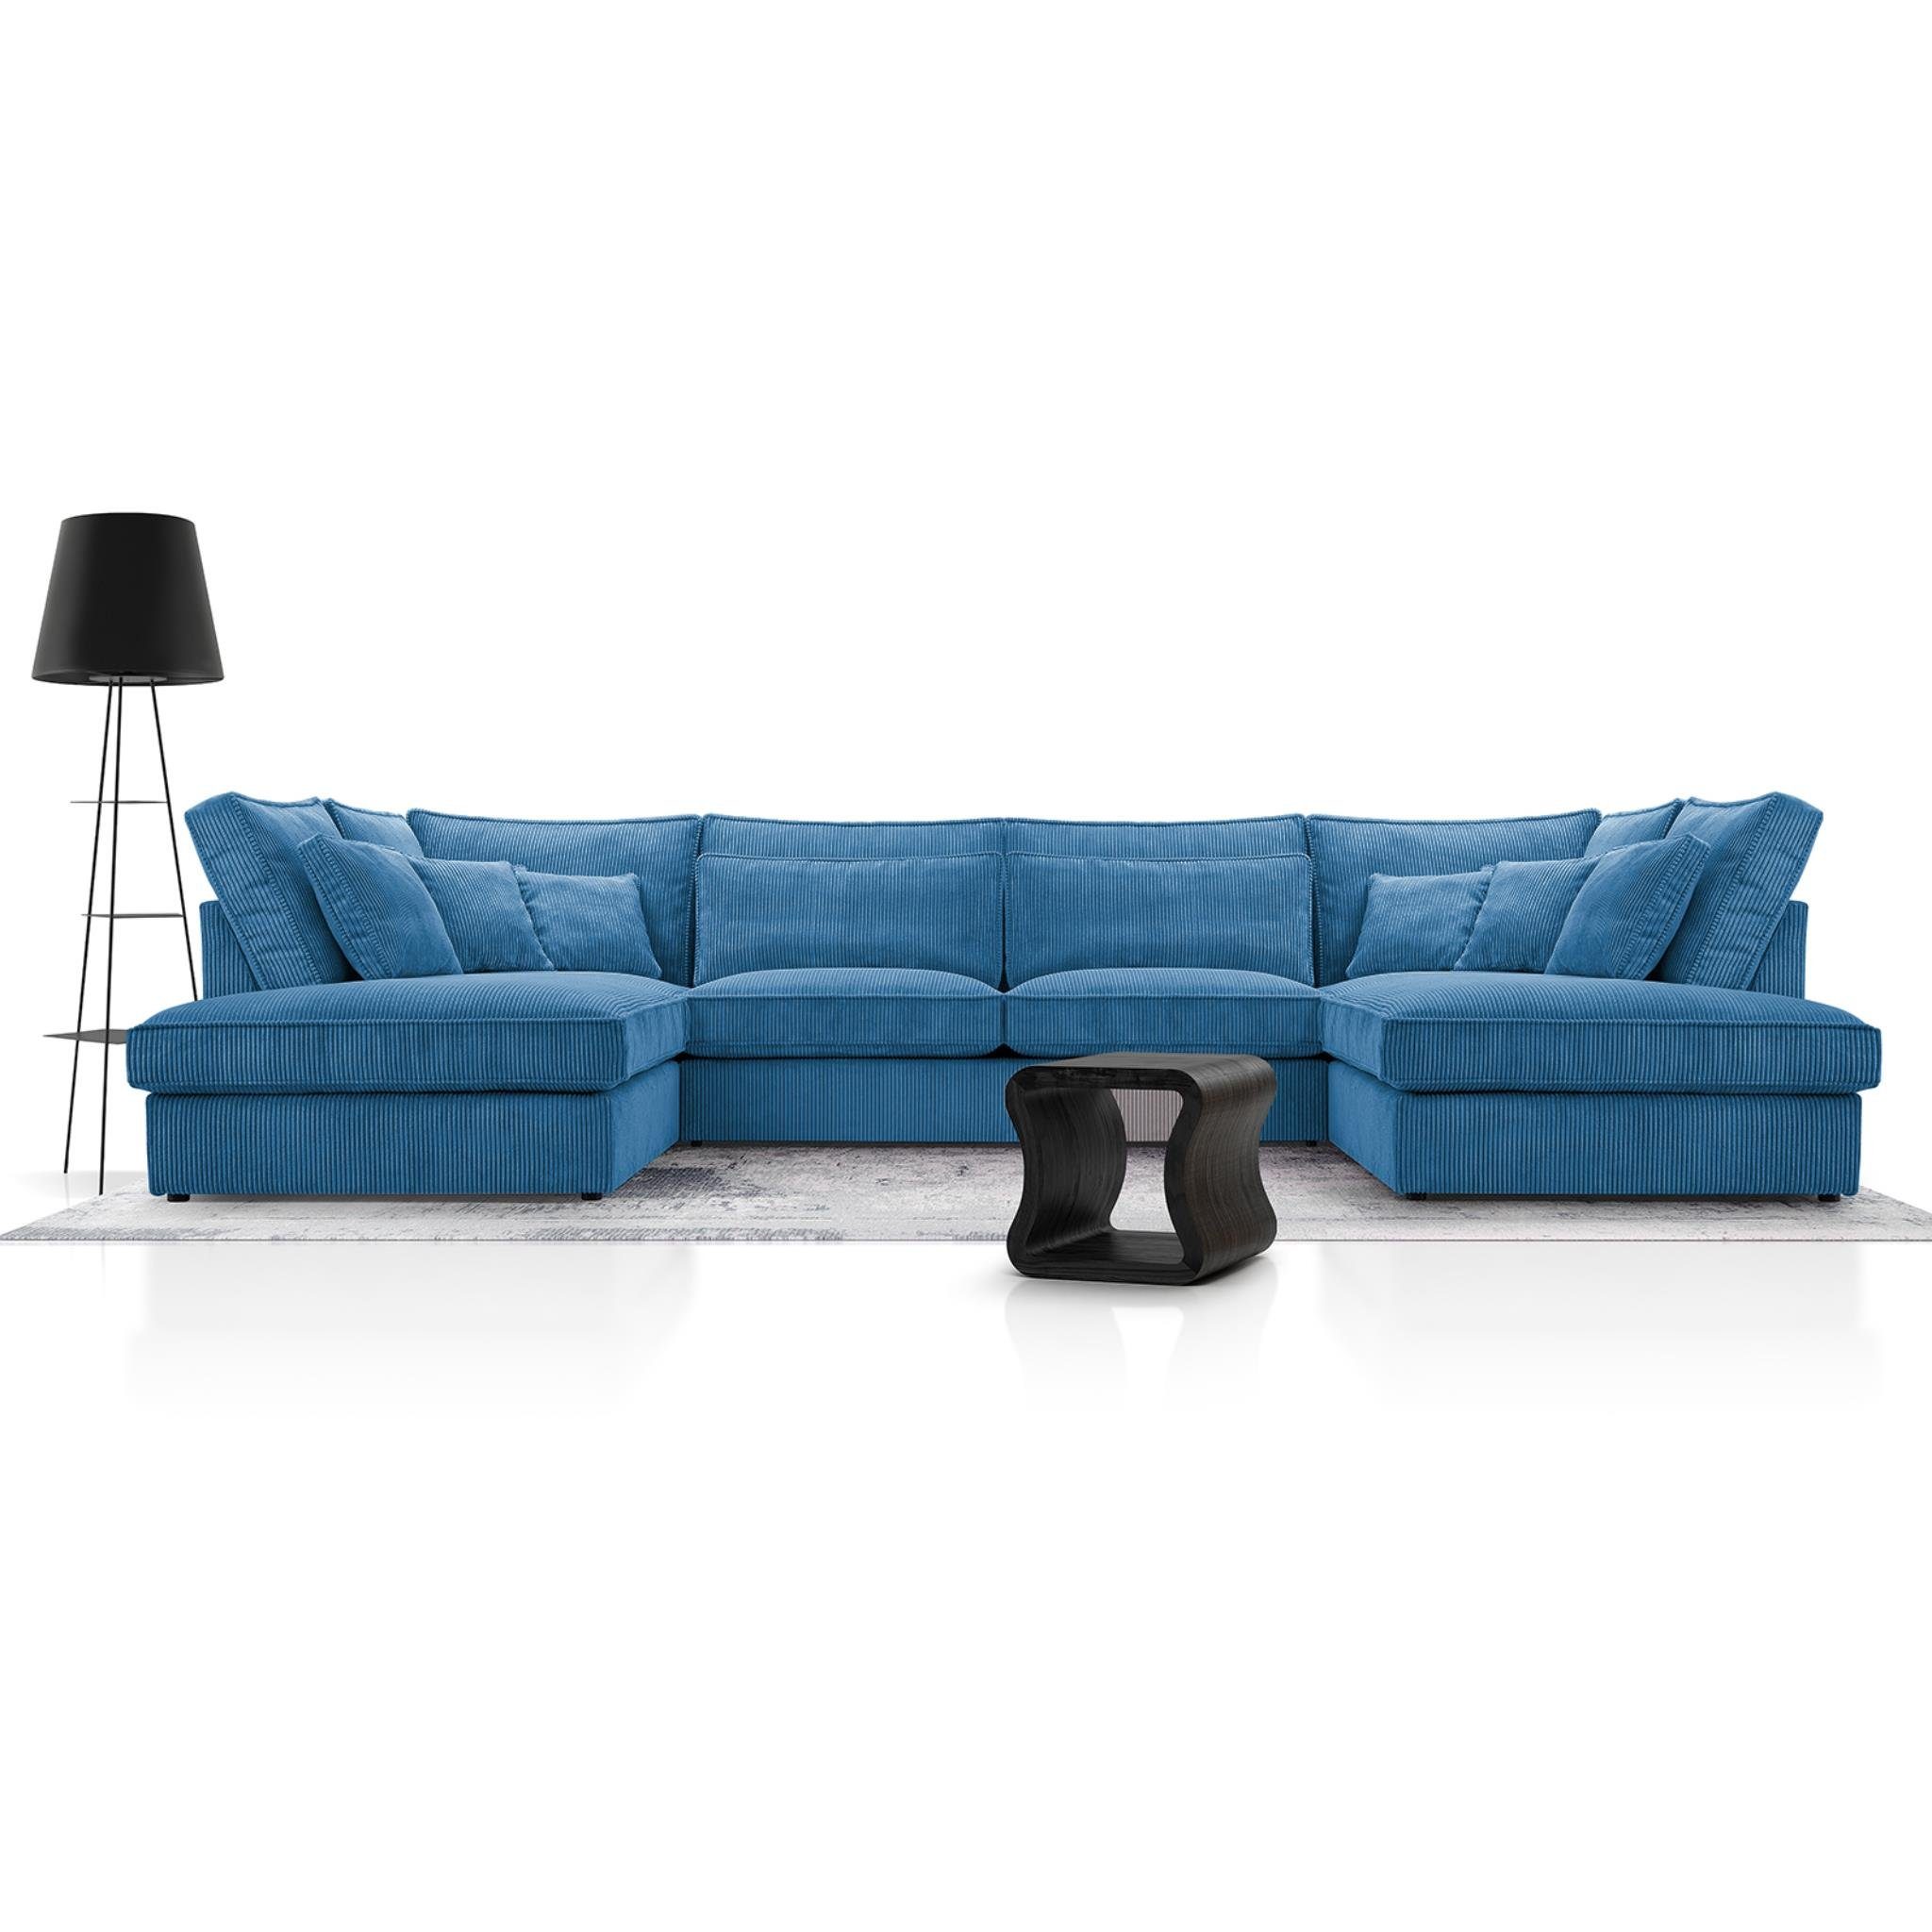 aus 75) cm (lincoln Polsterecke 407 Blau große Wohnlandschaft Beautysofa Sofa, modern U-Form U, Corner u-förmige Parma Velours, Ecksofa